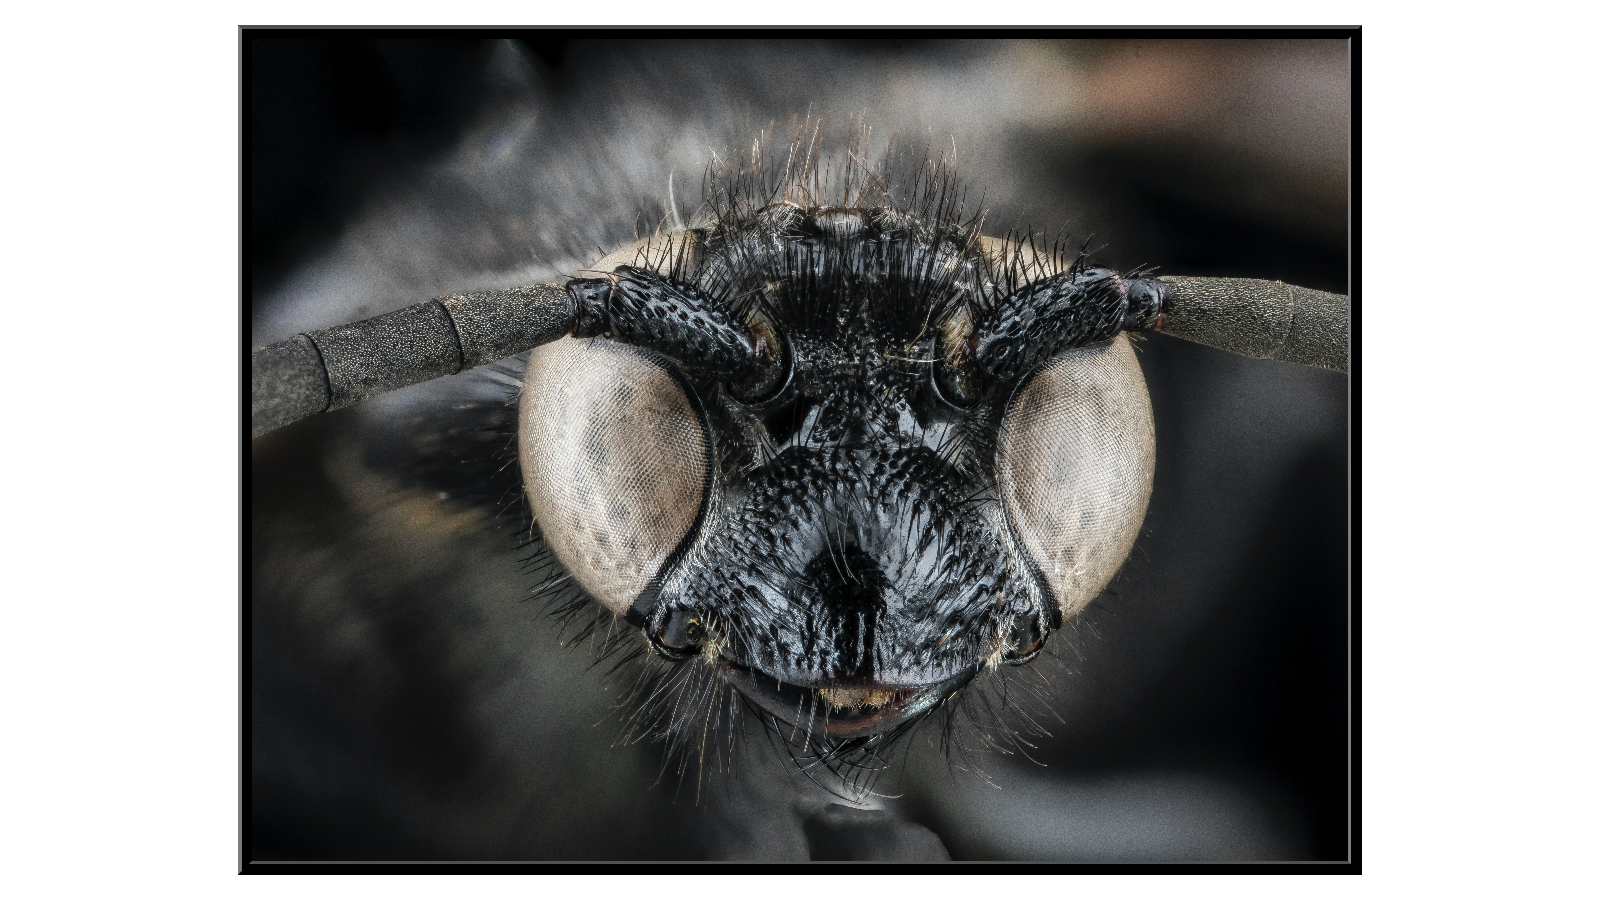 Eye to Eye with the Wasp Scolia Bicincta